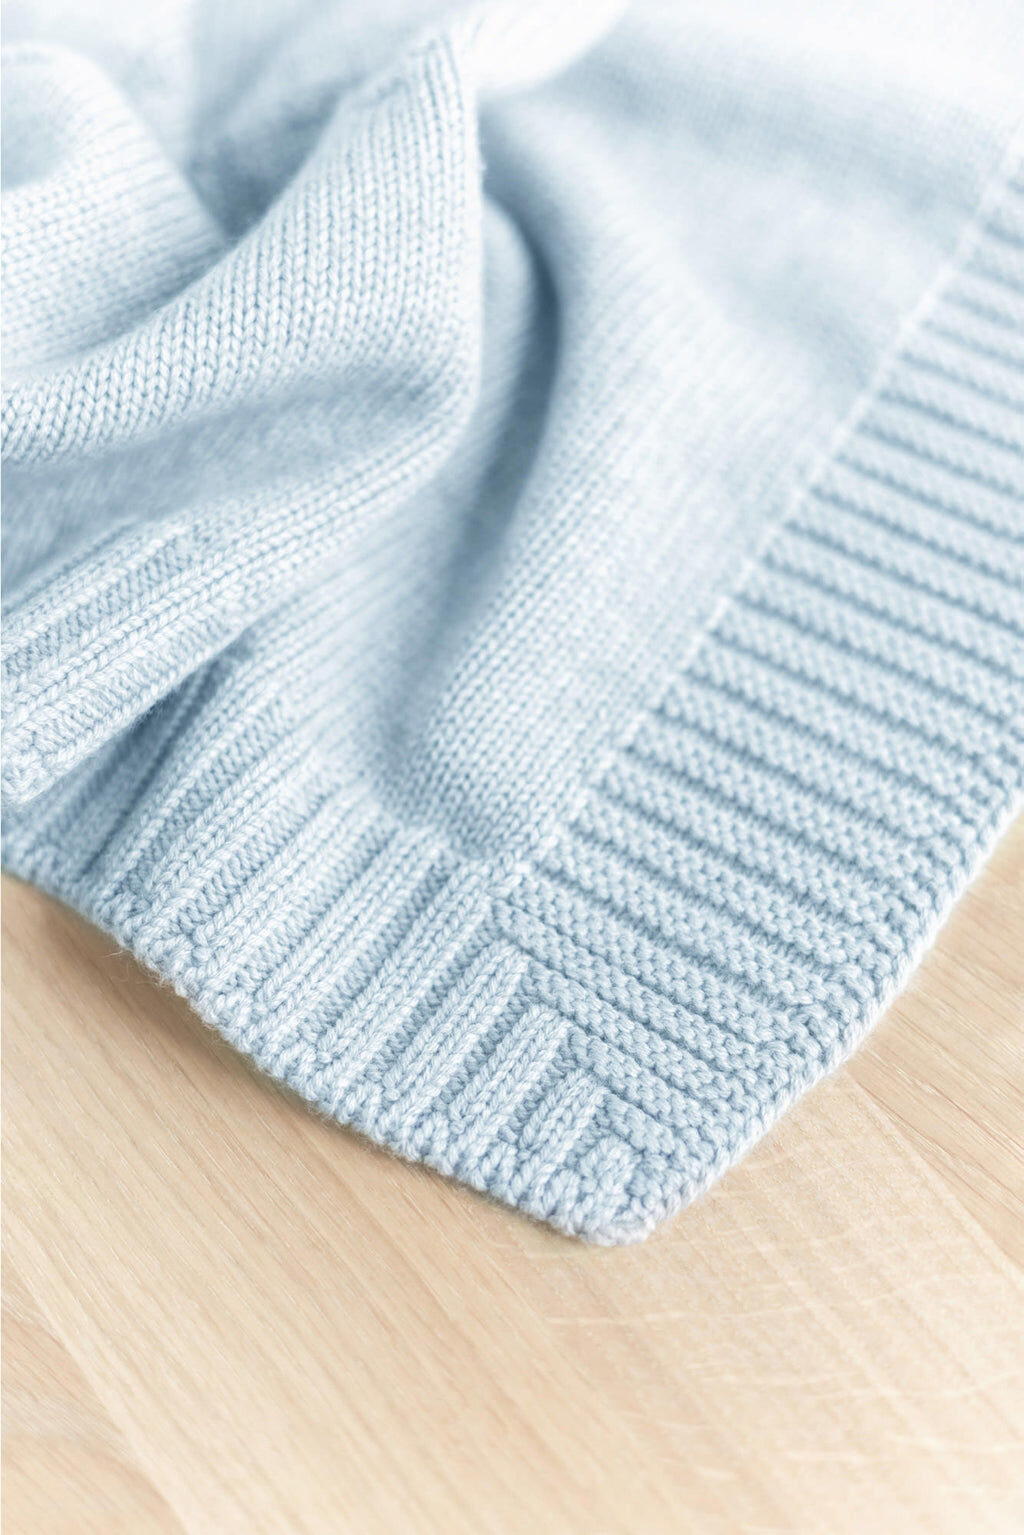 Blanket Personalized - Wool Sky blue